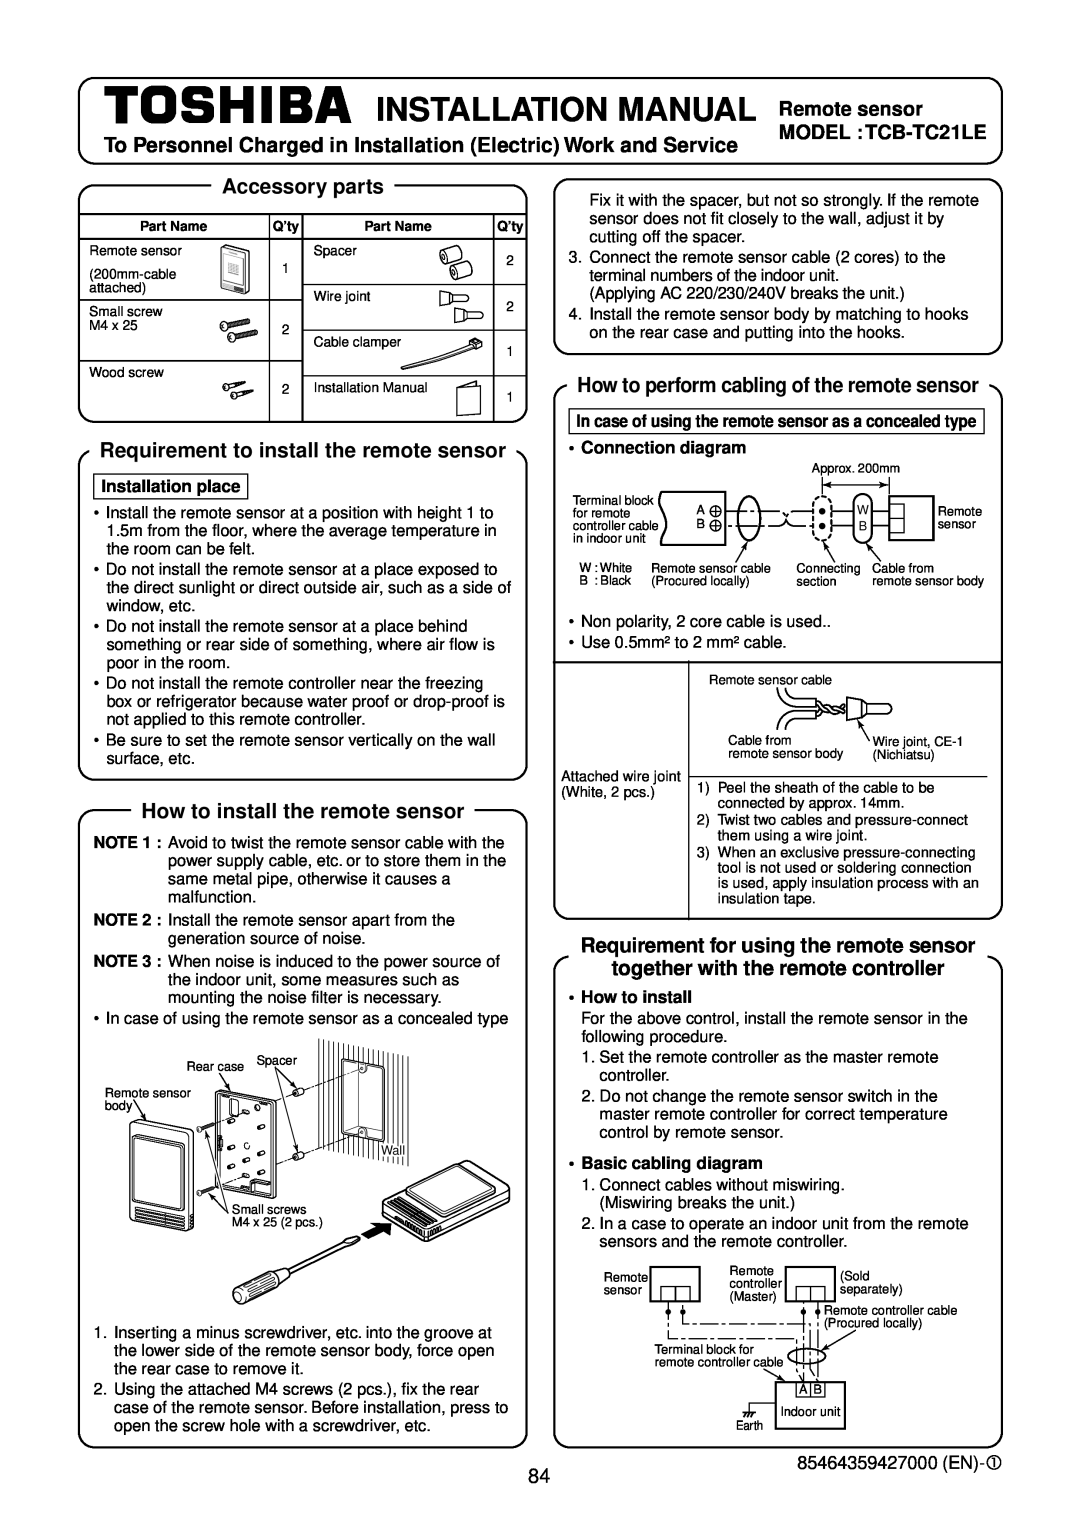 Toshiba R410A service manual INSTALLATION MANUAL Remote sensor, Accessory parts, Requirement to install the remote sensor 